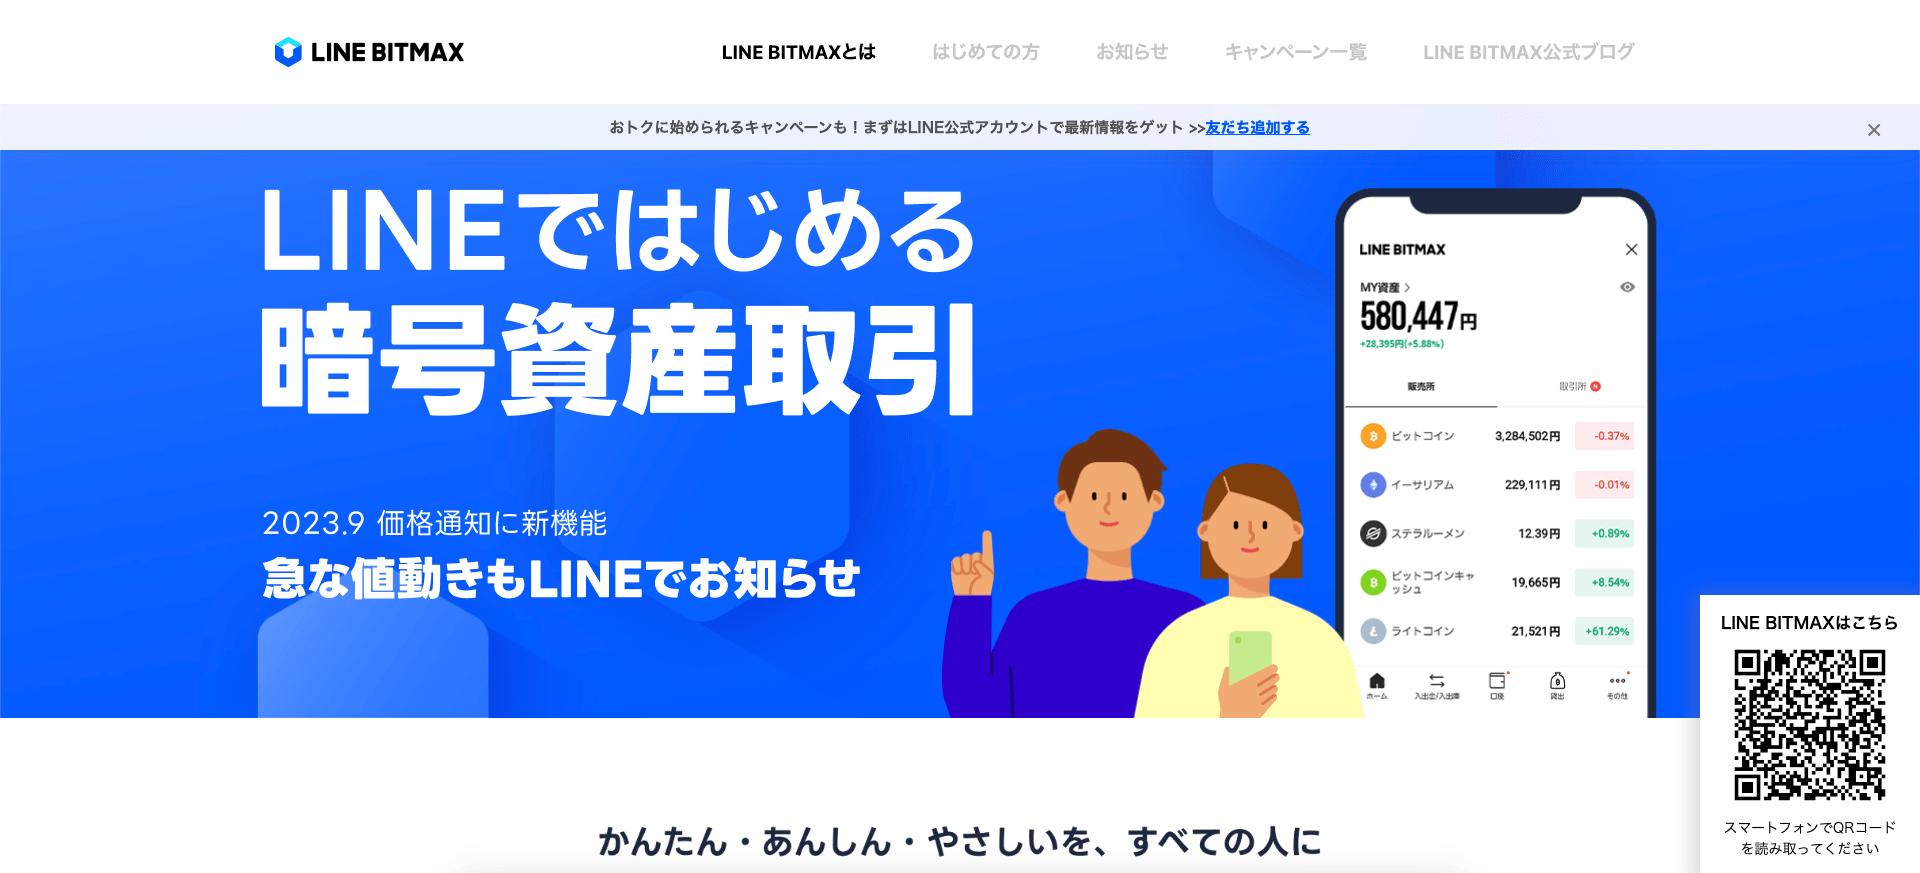 LINE BITMAX 公式サイト